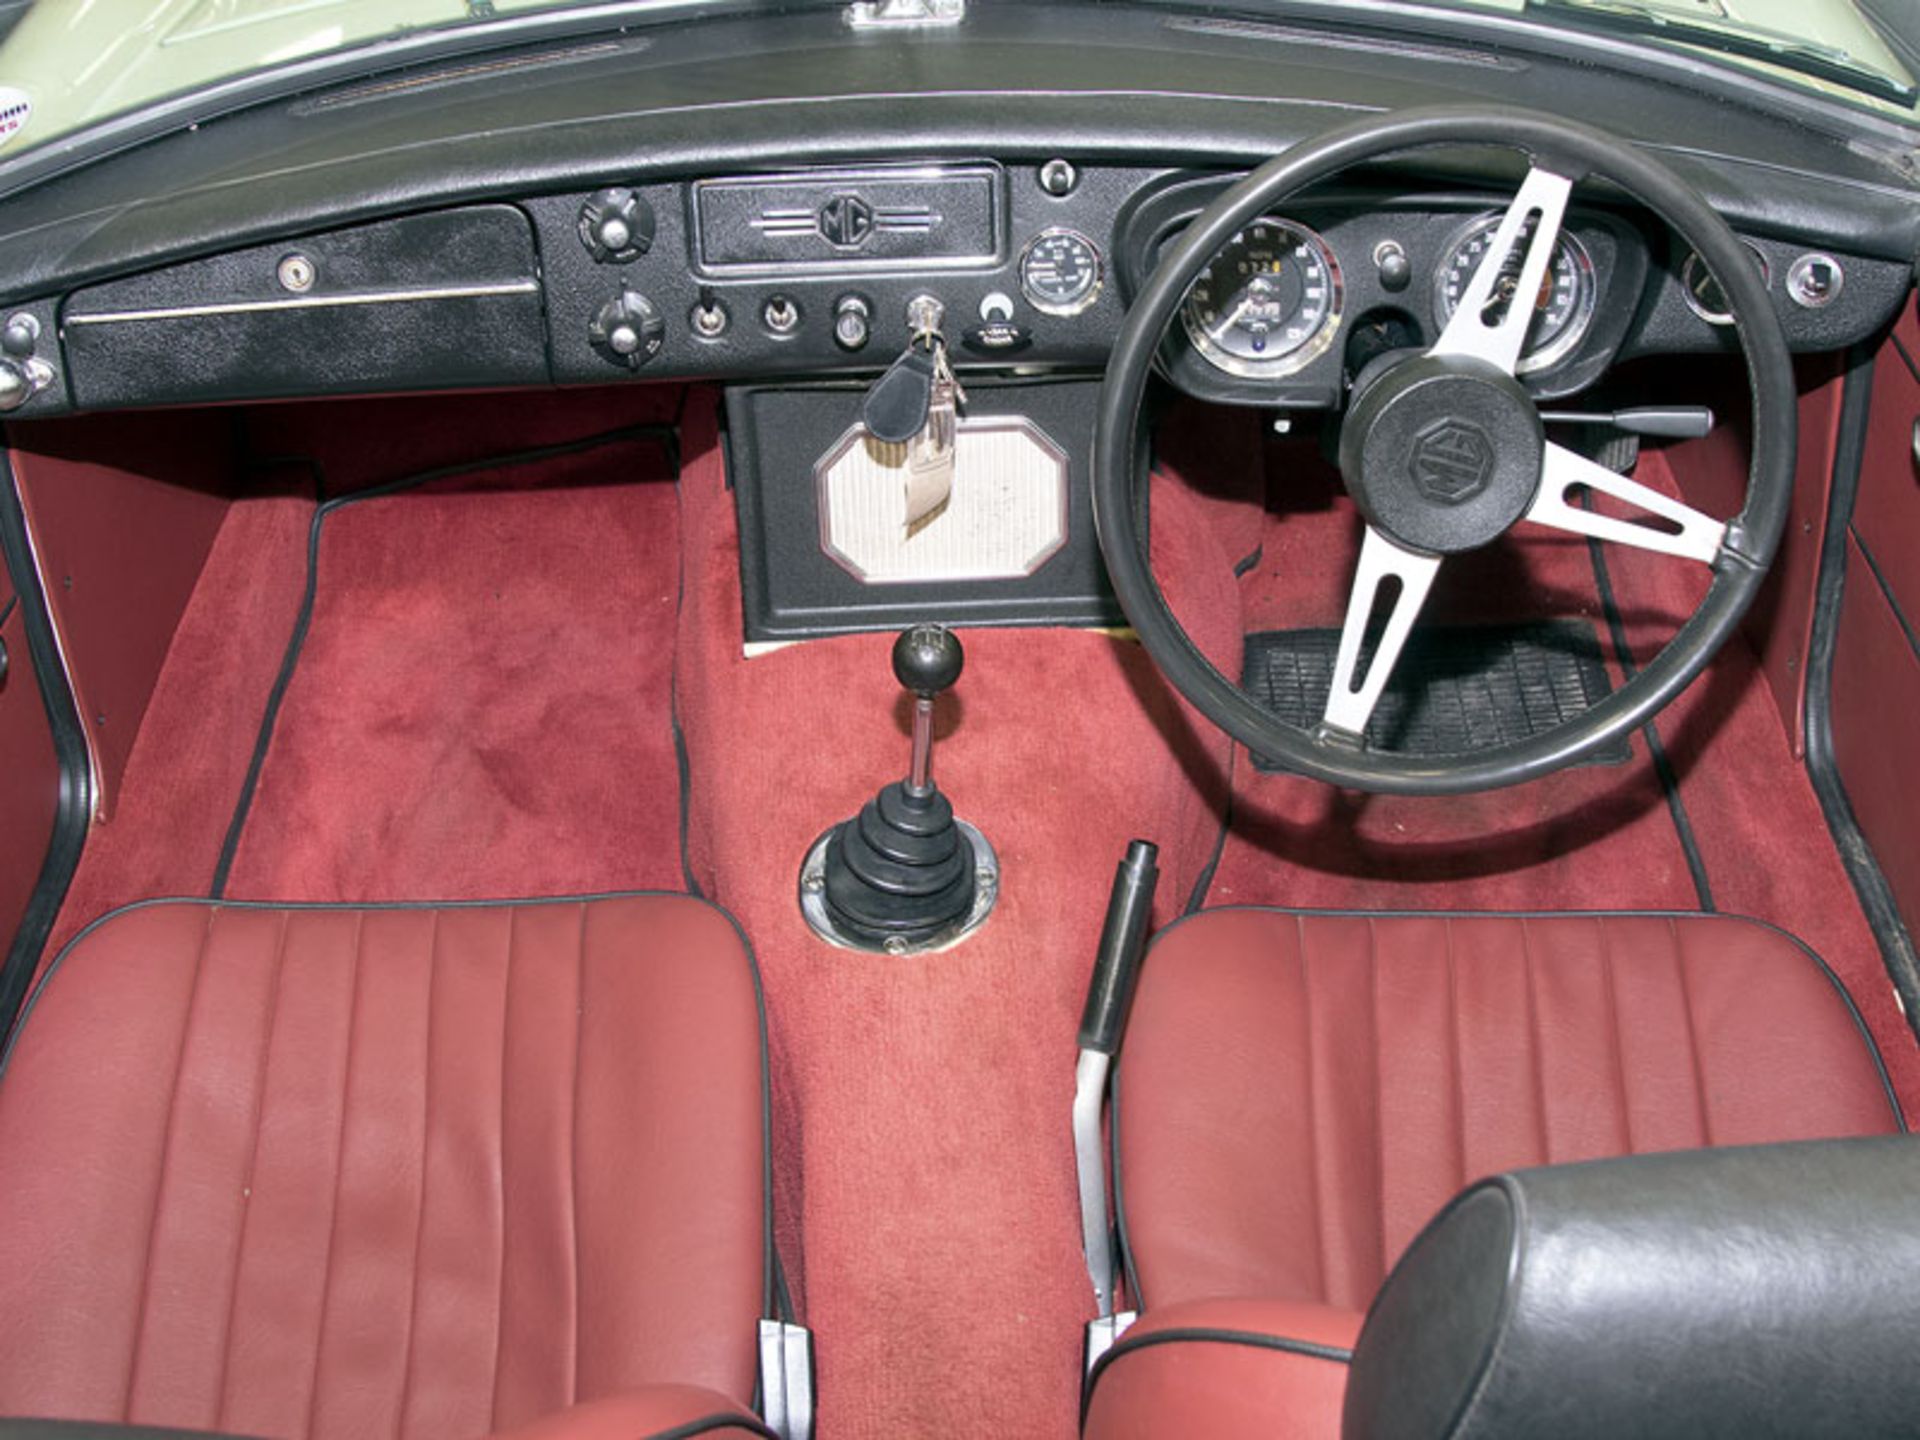 1971 MG B Roadster - Image 4 of 6